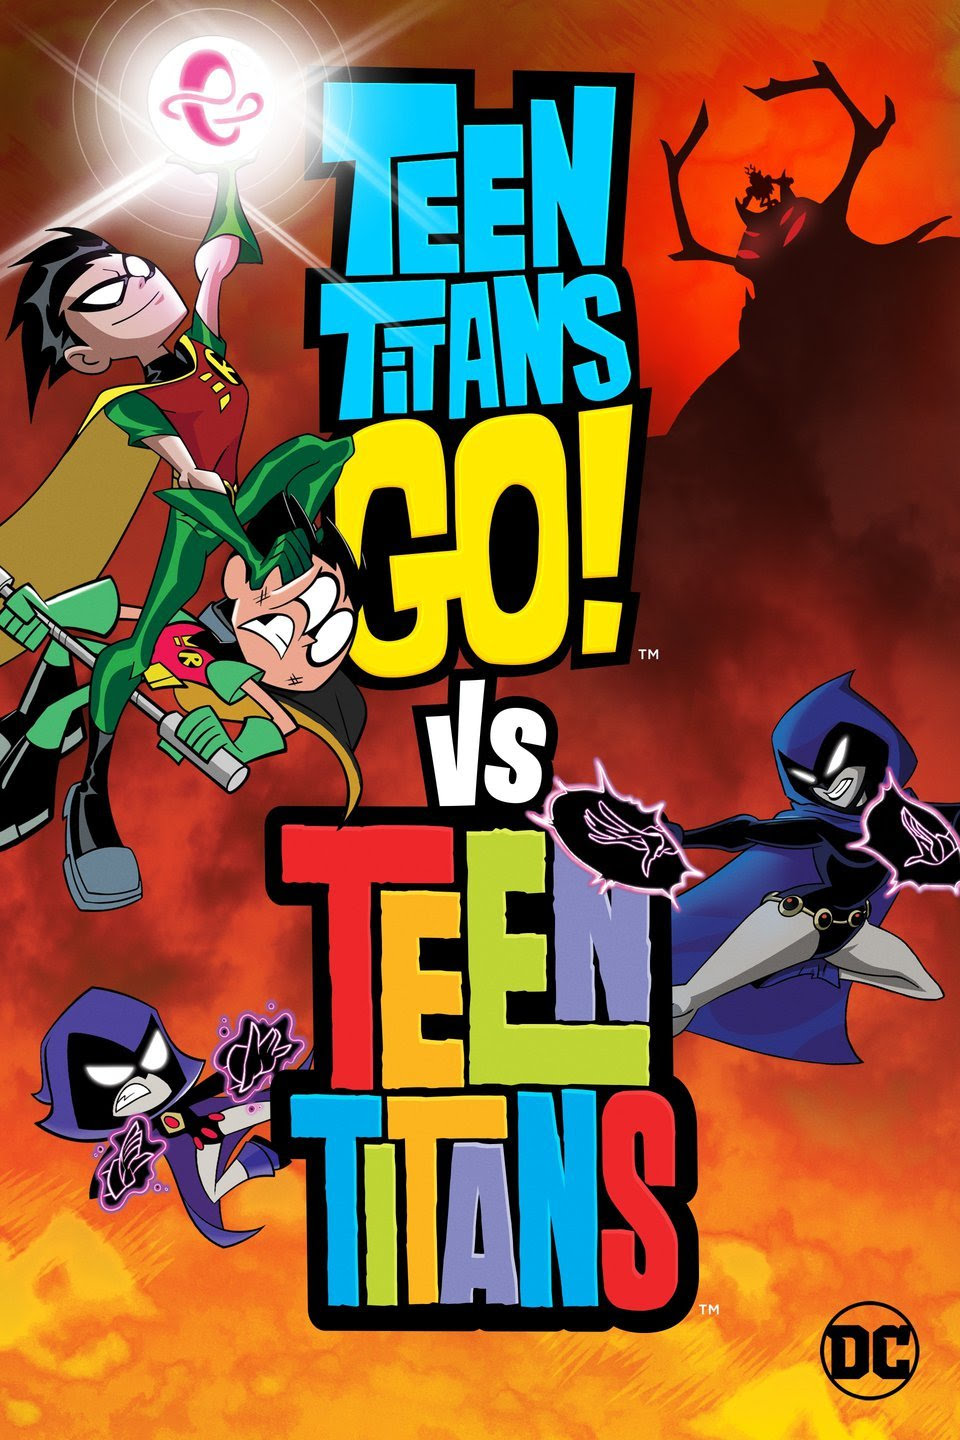 Velocidade em Skate, Teen Titans